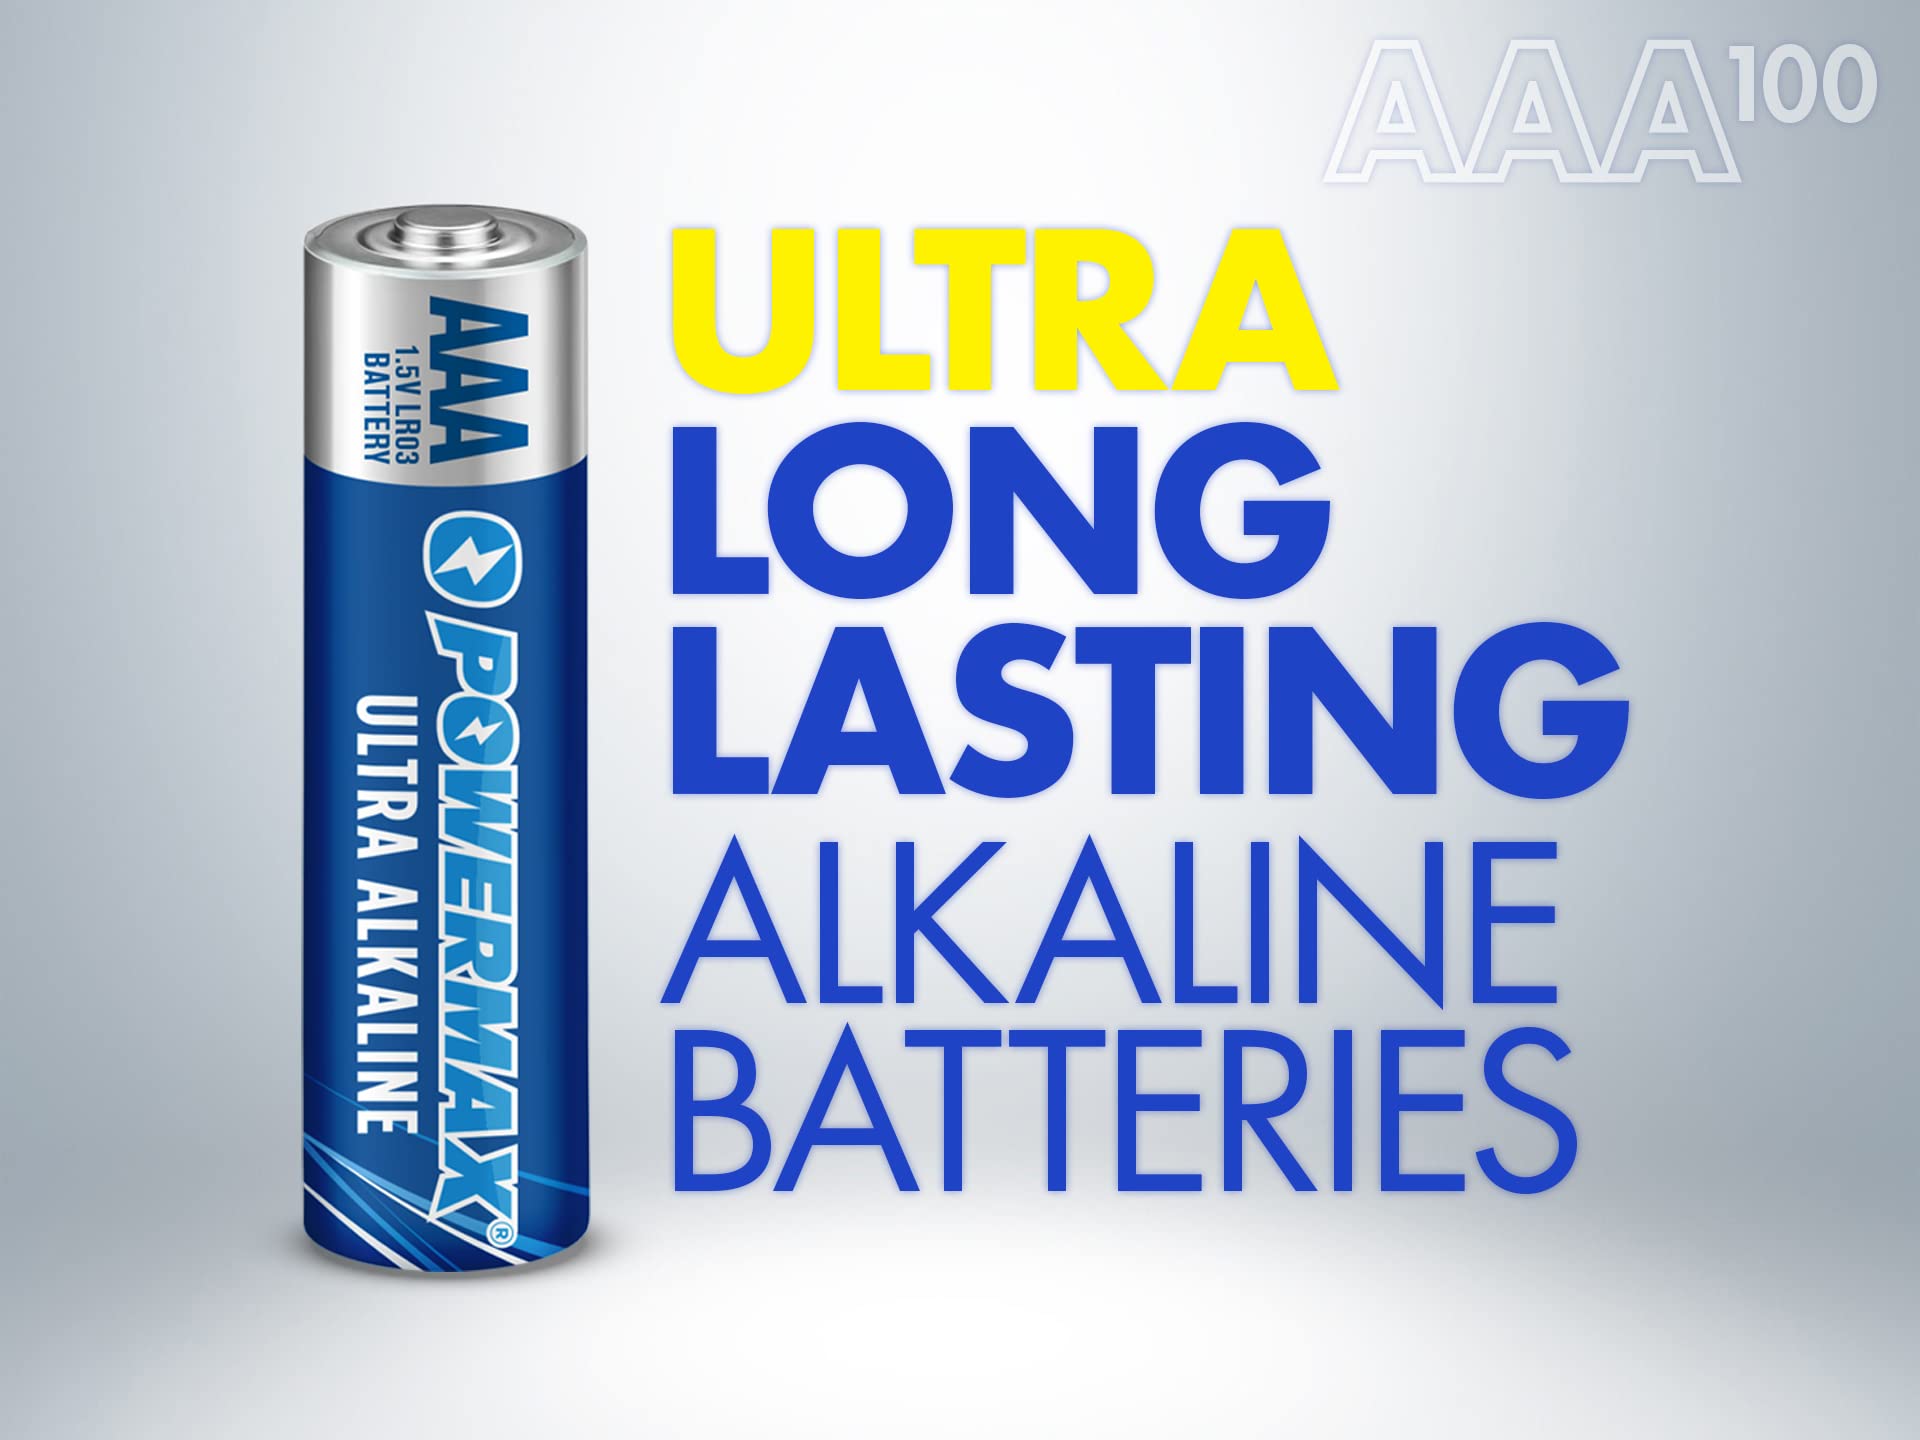 Powermax 100-Count AAA Batteries, Ultra Long Lasting Alkaline Battery, 10-Year Shelf Life, Reclosable Packaging